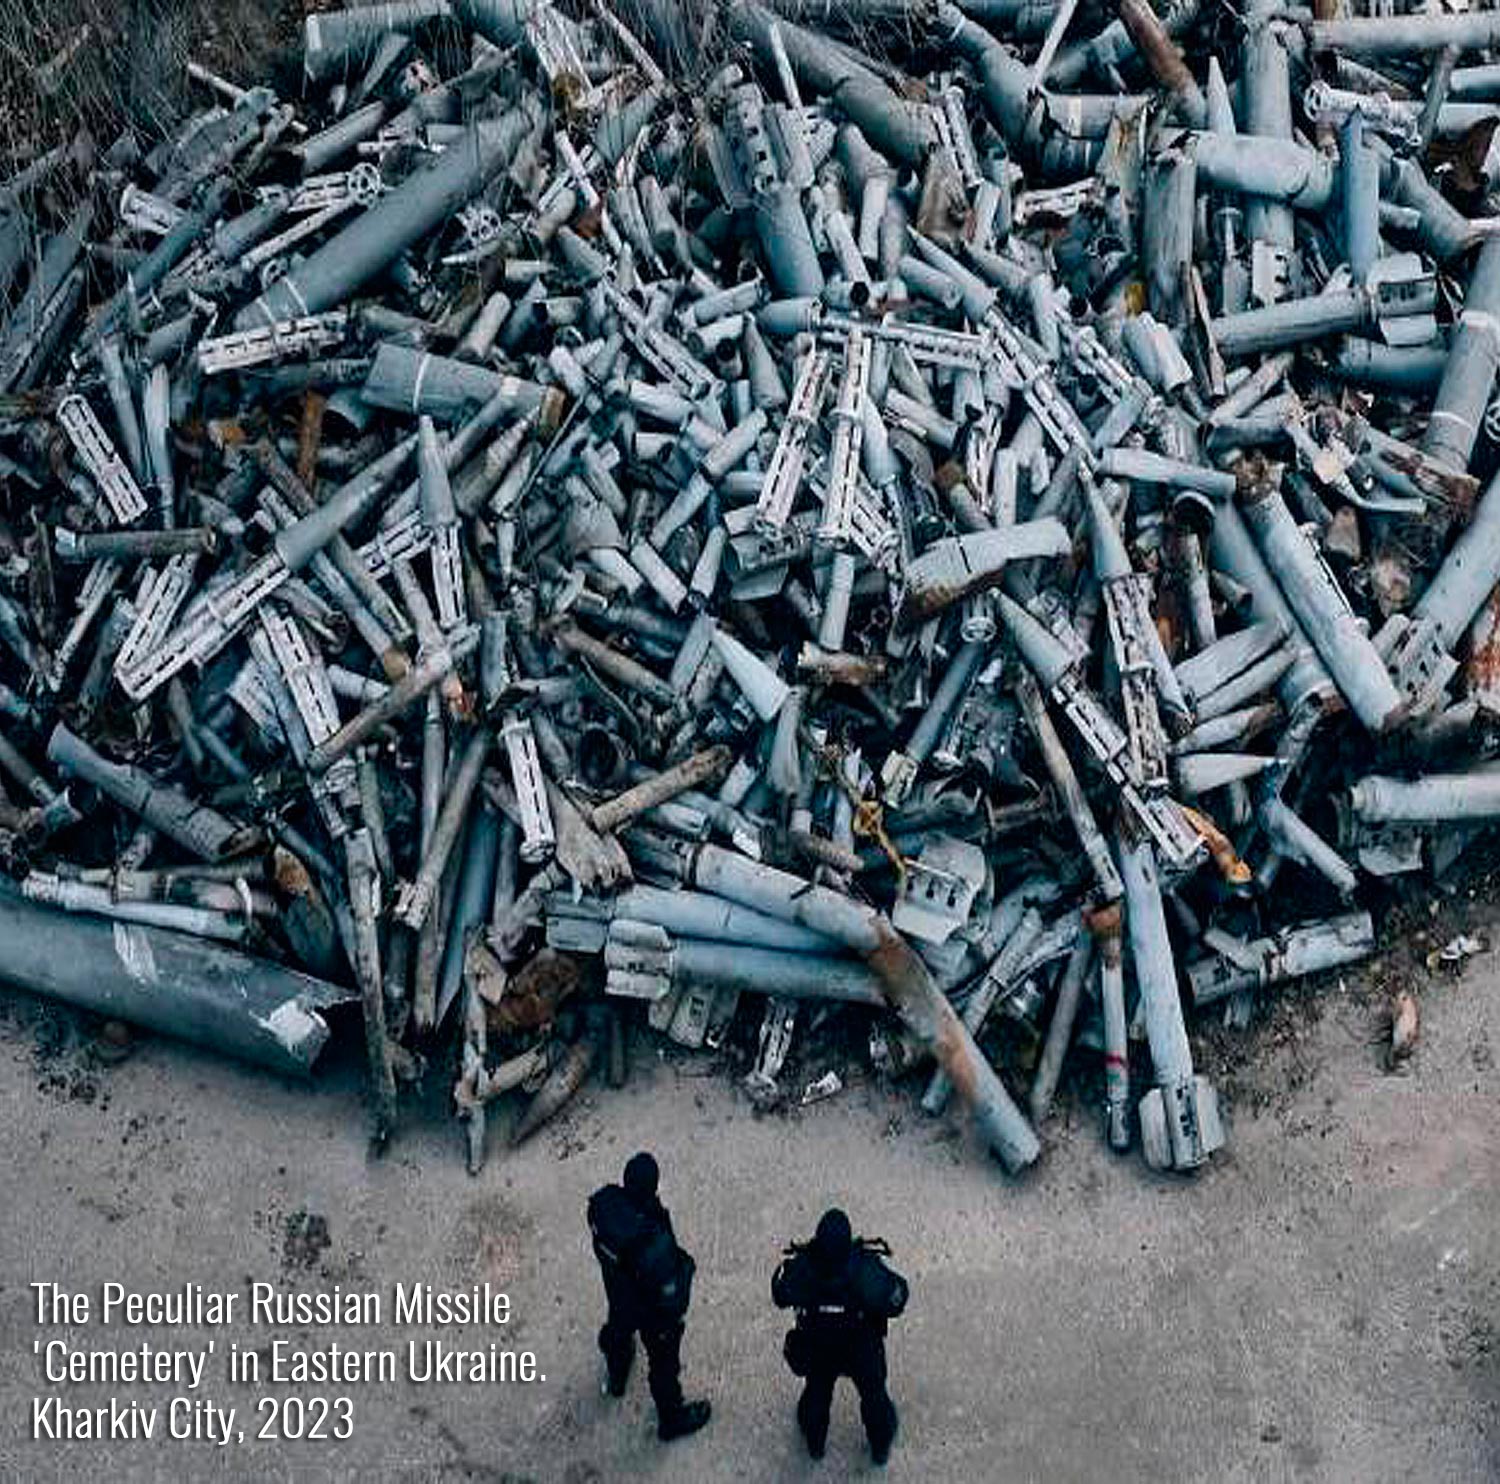 Remains of Russian combat missiles in Ukraine